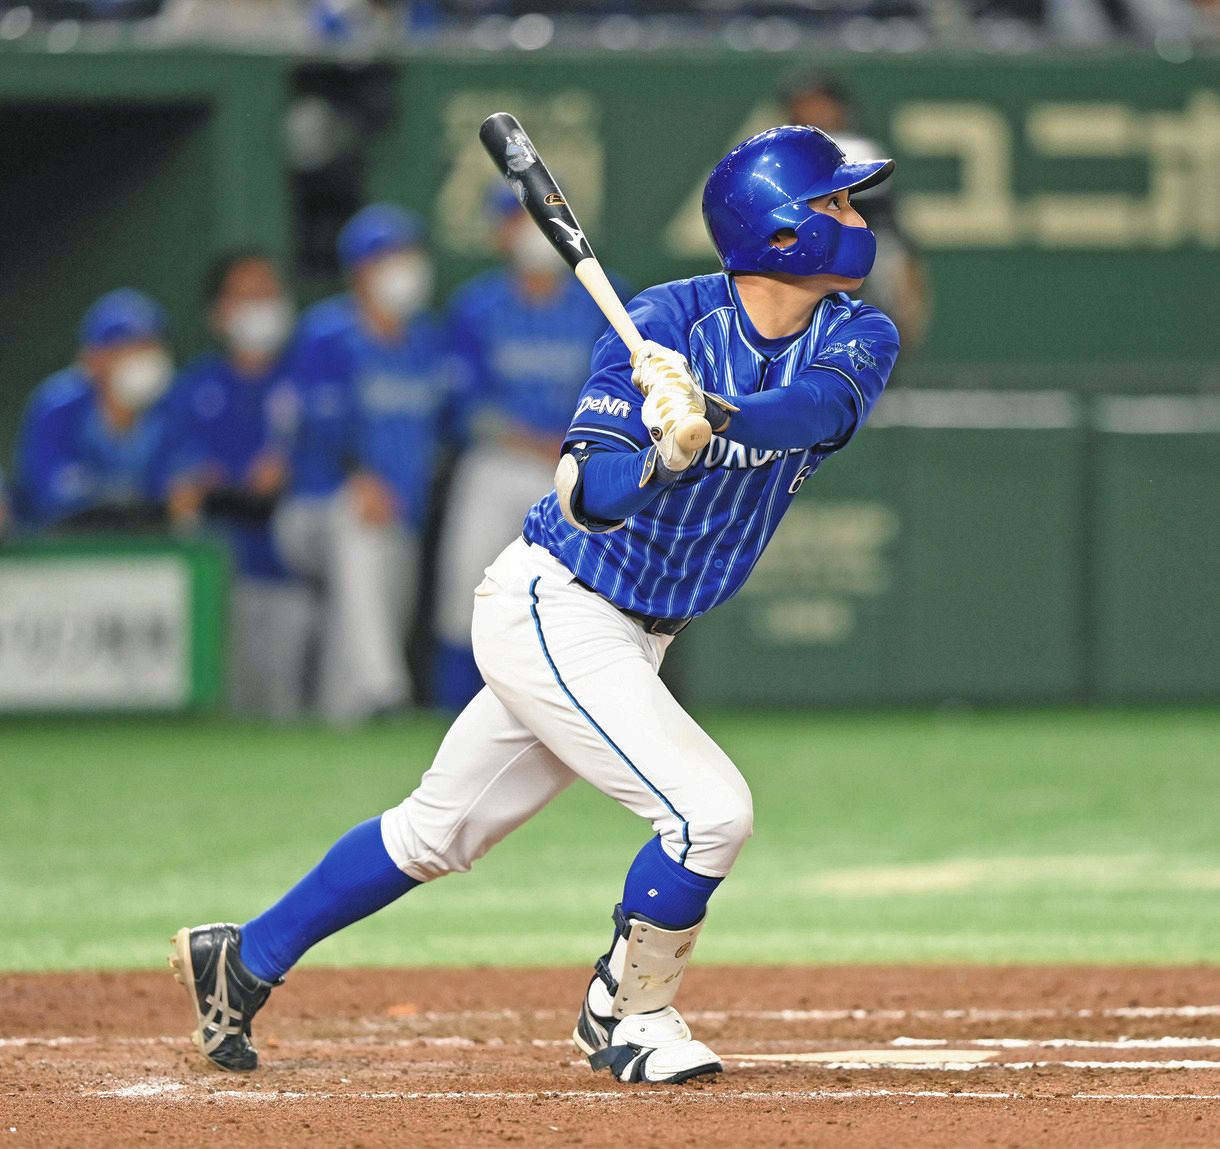 DeNA】森敬斗がプロ初本塁打、桐蔭学園からドラフト1位で入団3年目 